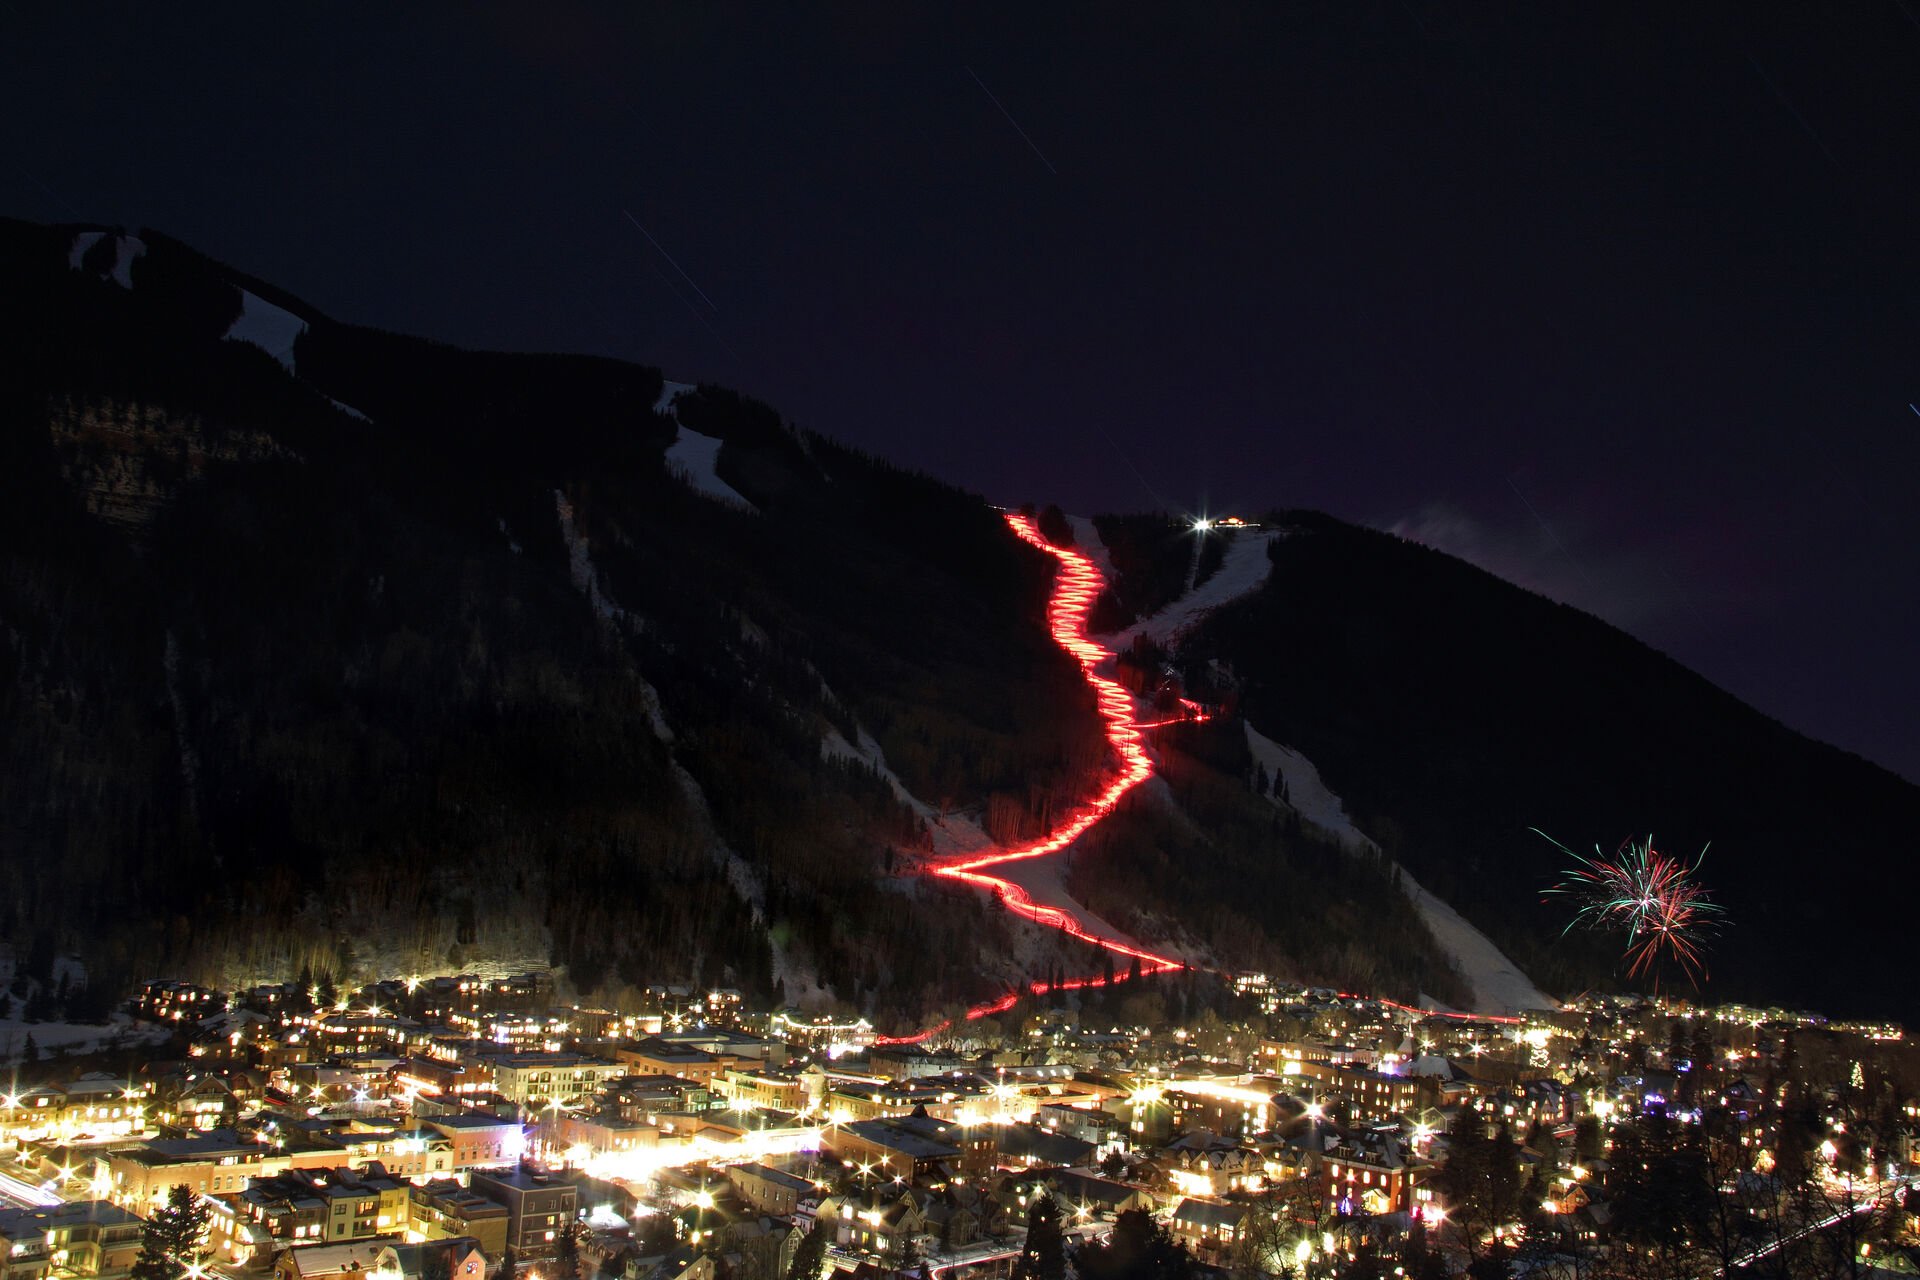 View of ski trail at night